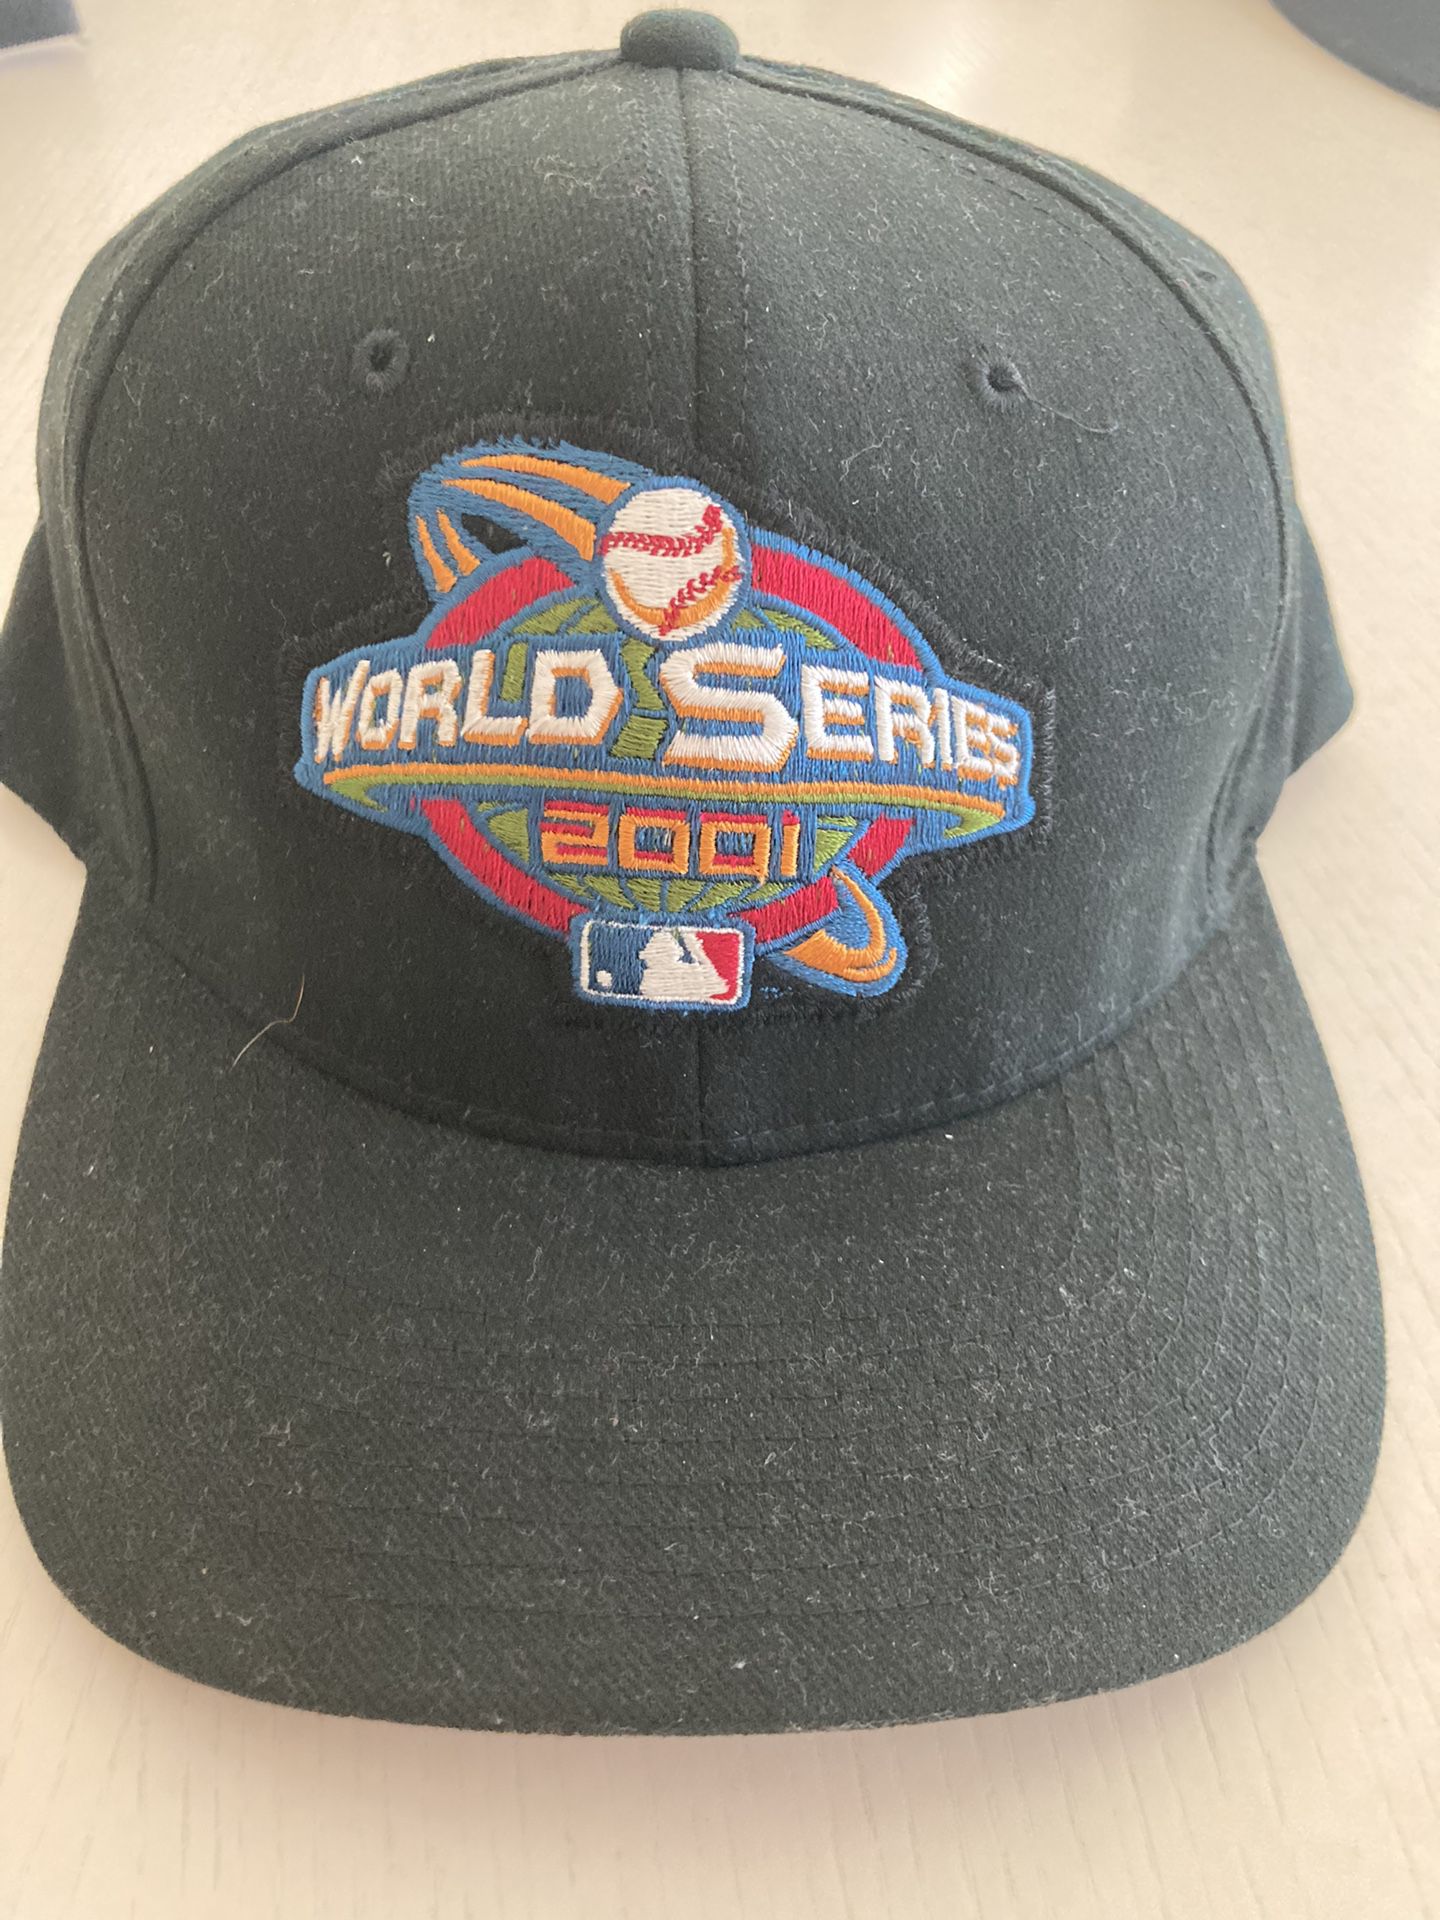 2001 World Series Hat Yankees Vs The Mets New